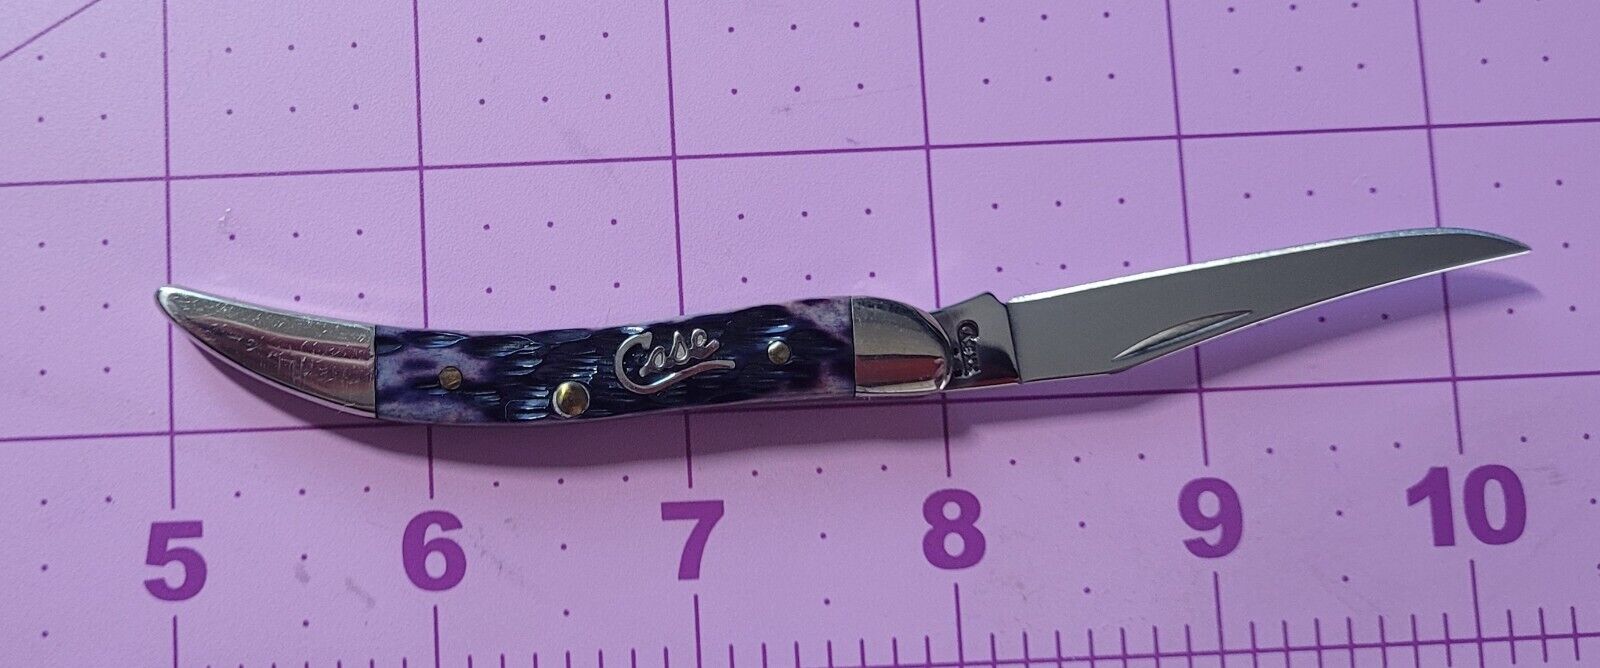 Case 610096 SS Toothpick Texas Purple Pocket Knife